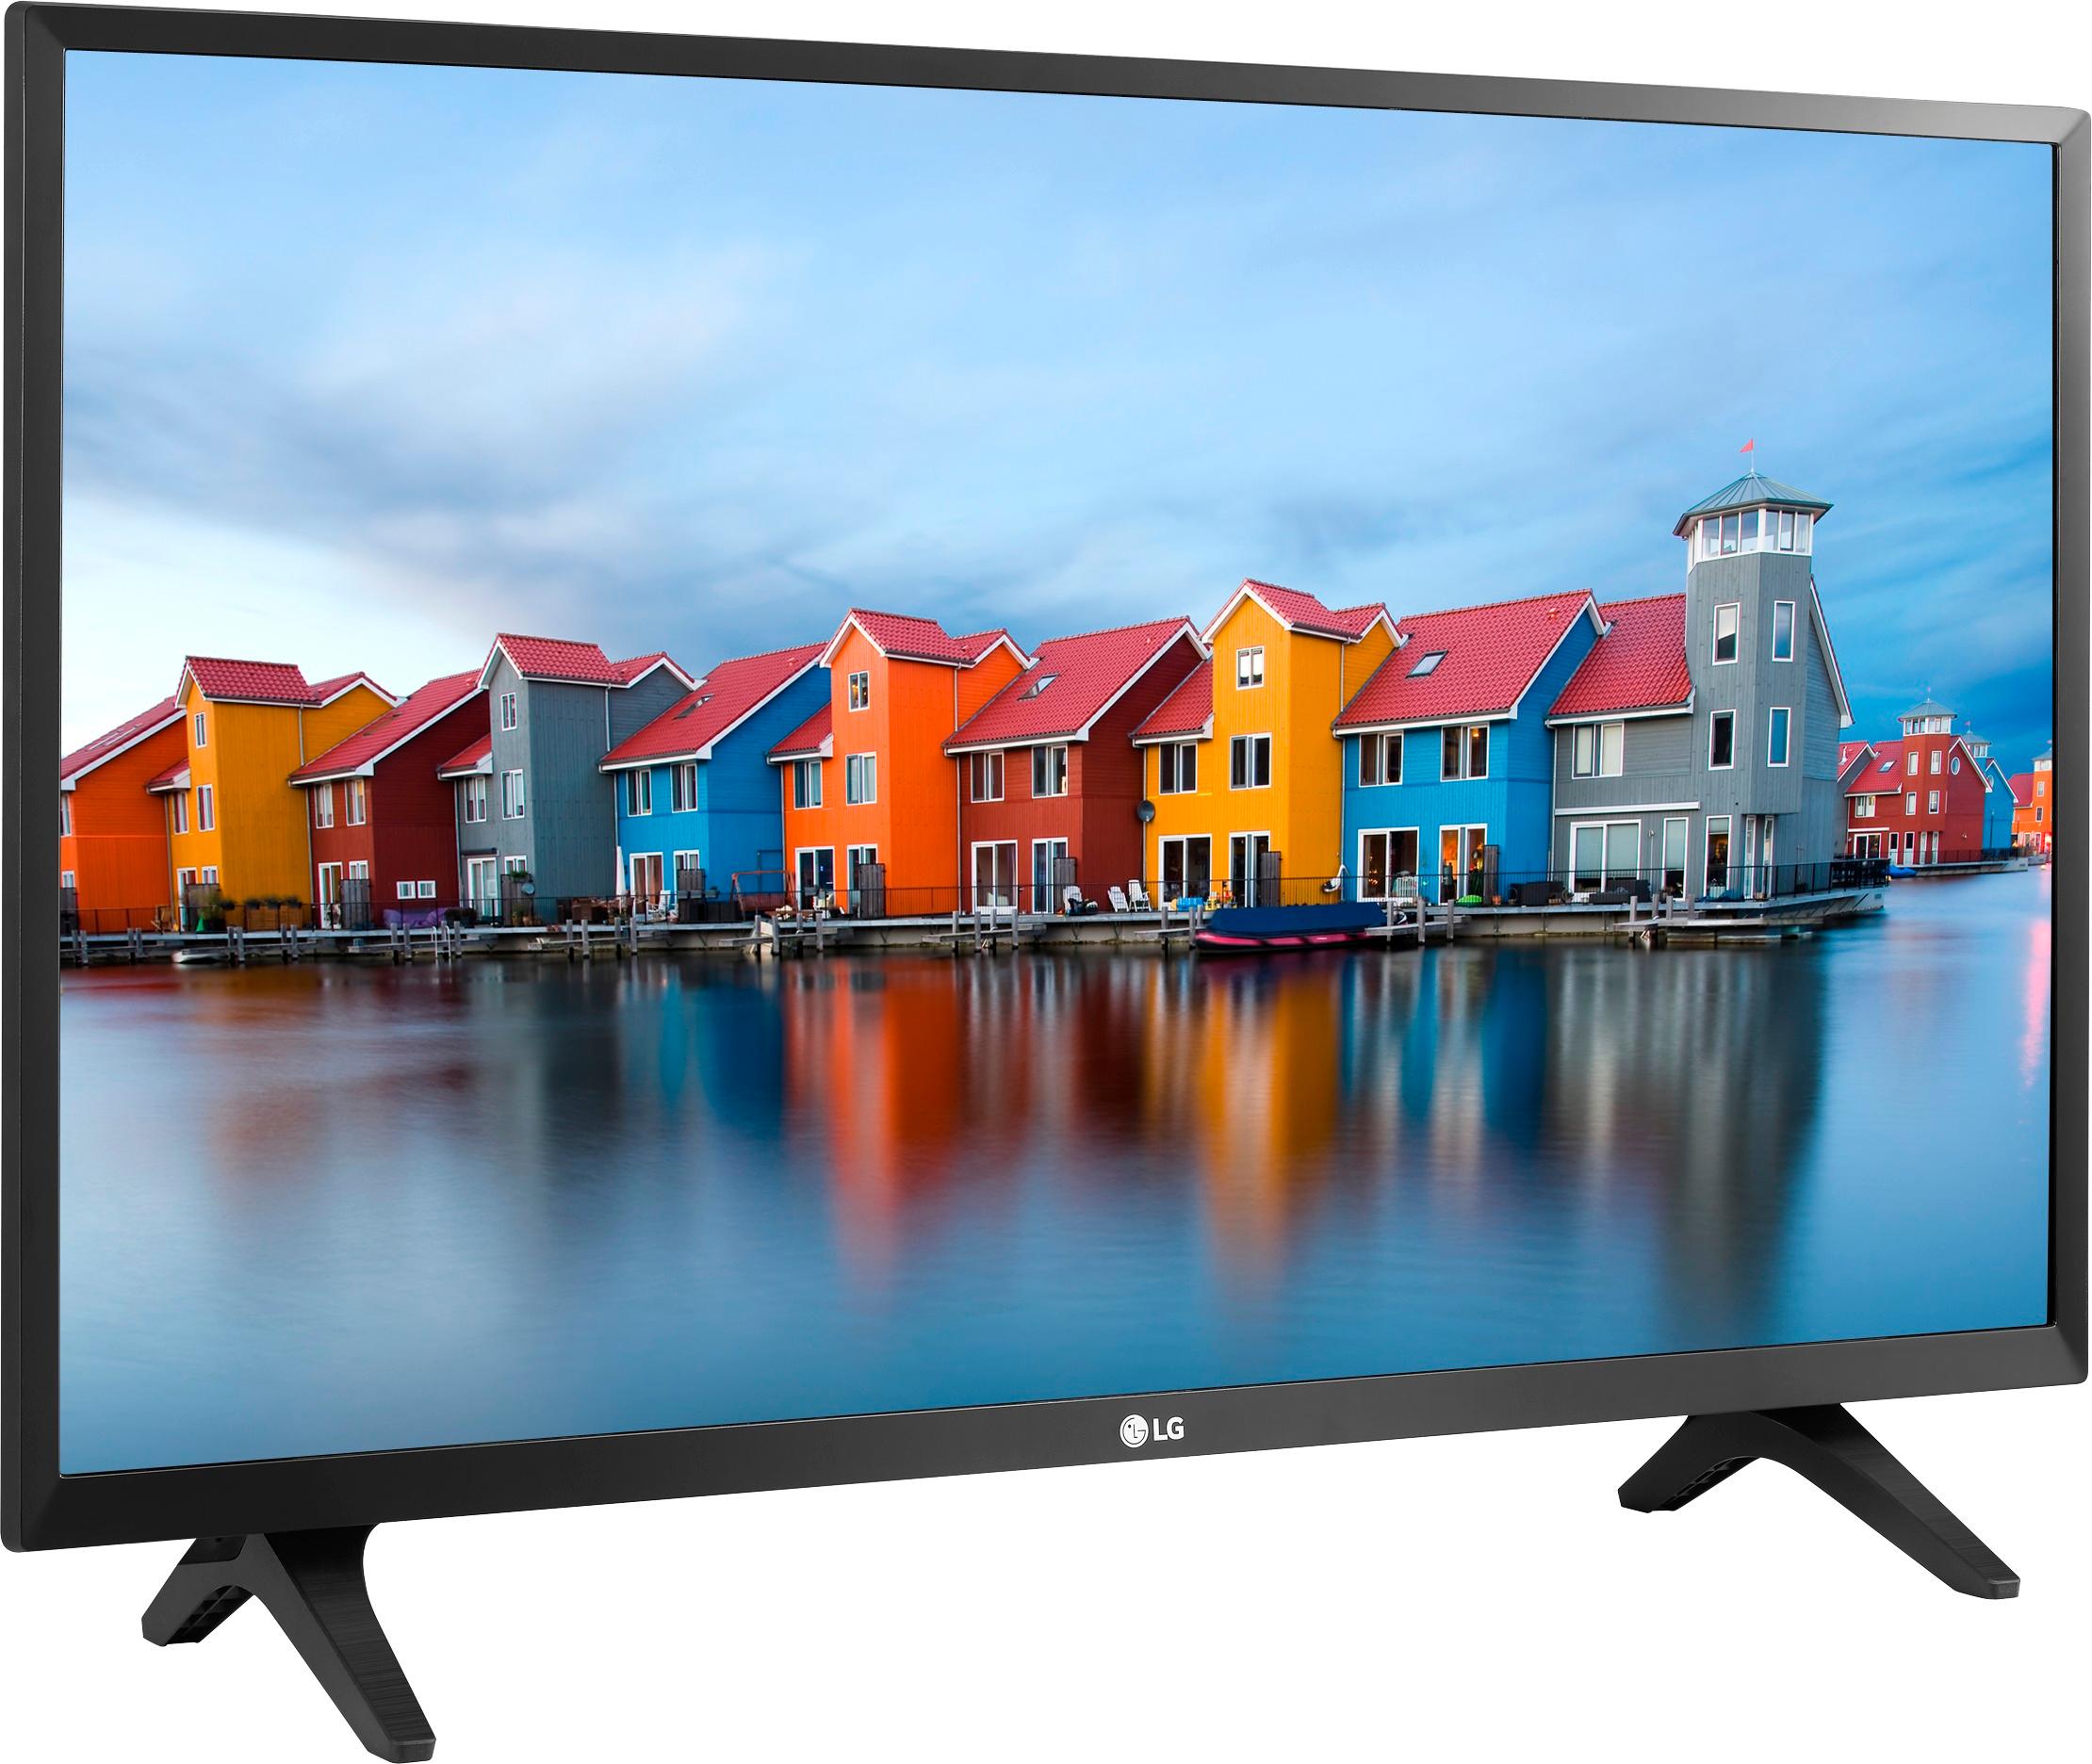 Best Buy: LG 28 Class LED 720p HDTV 28LJ400B-PU